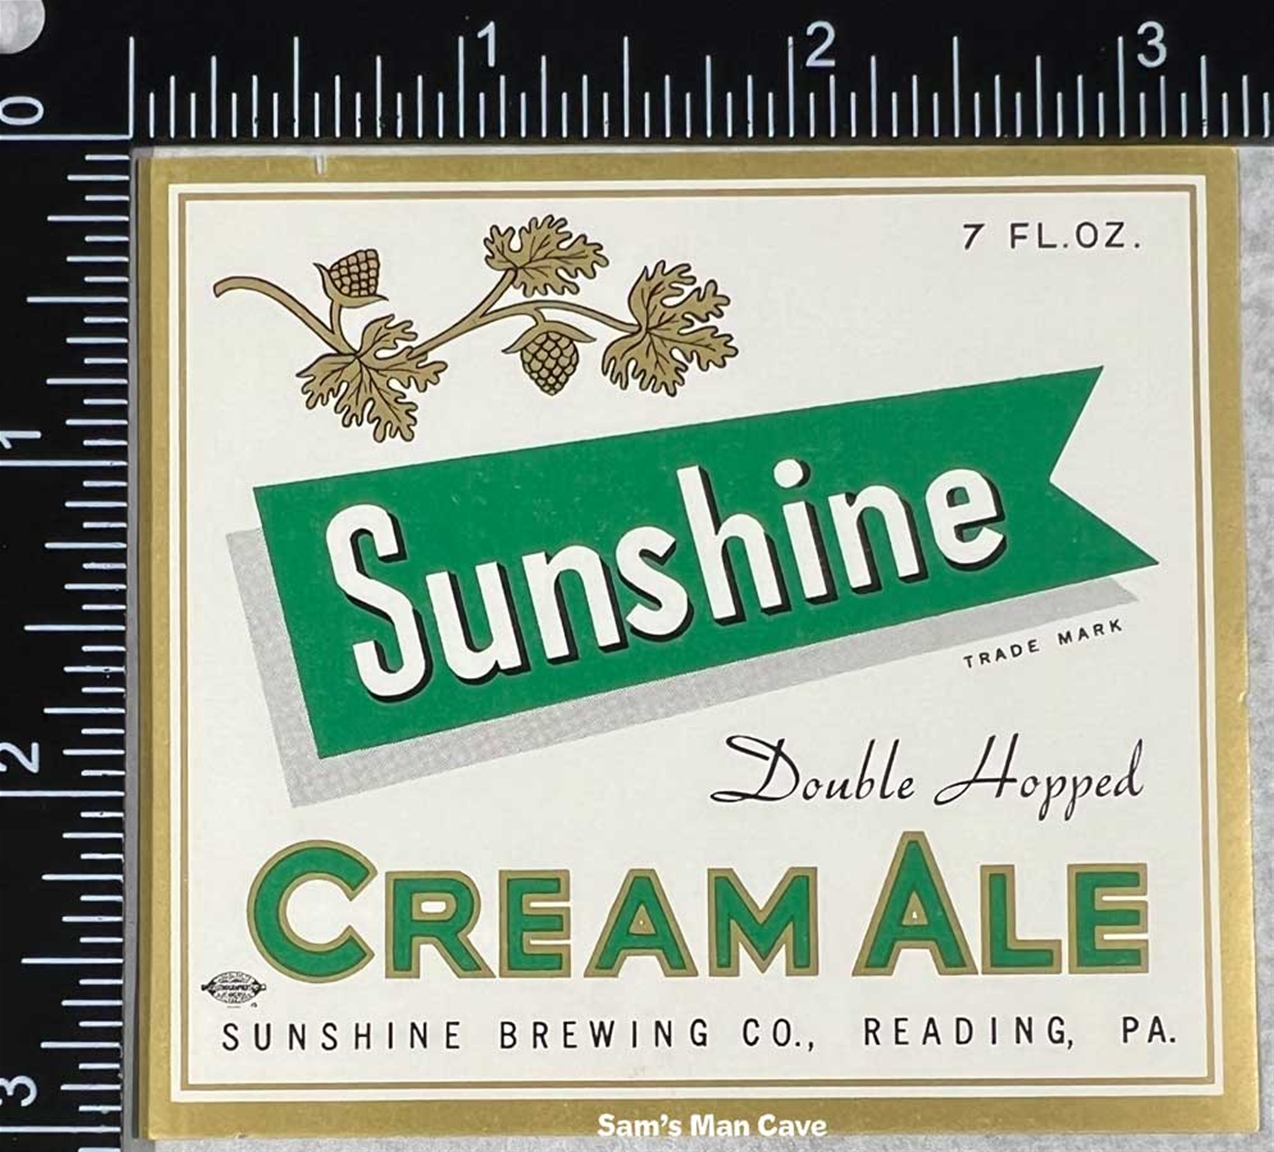 Sunshine Cream Ale Beer Label